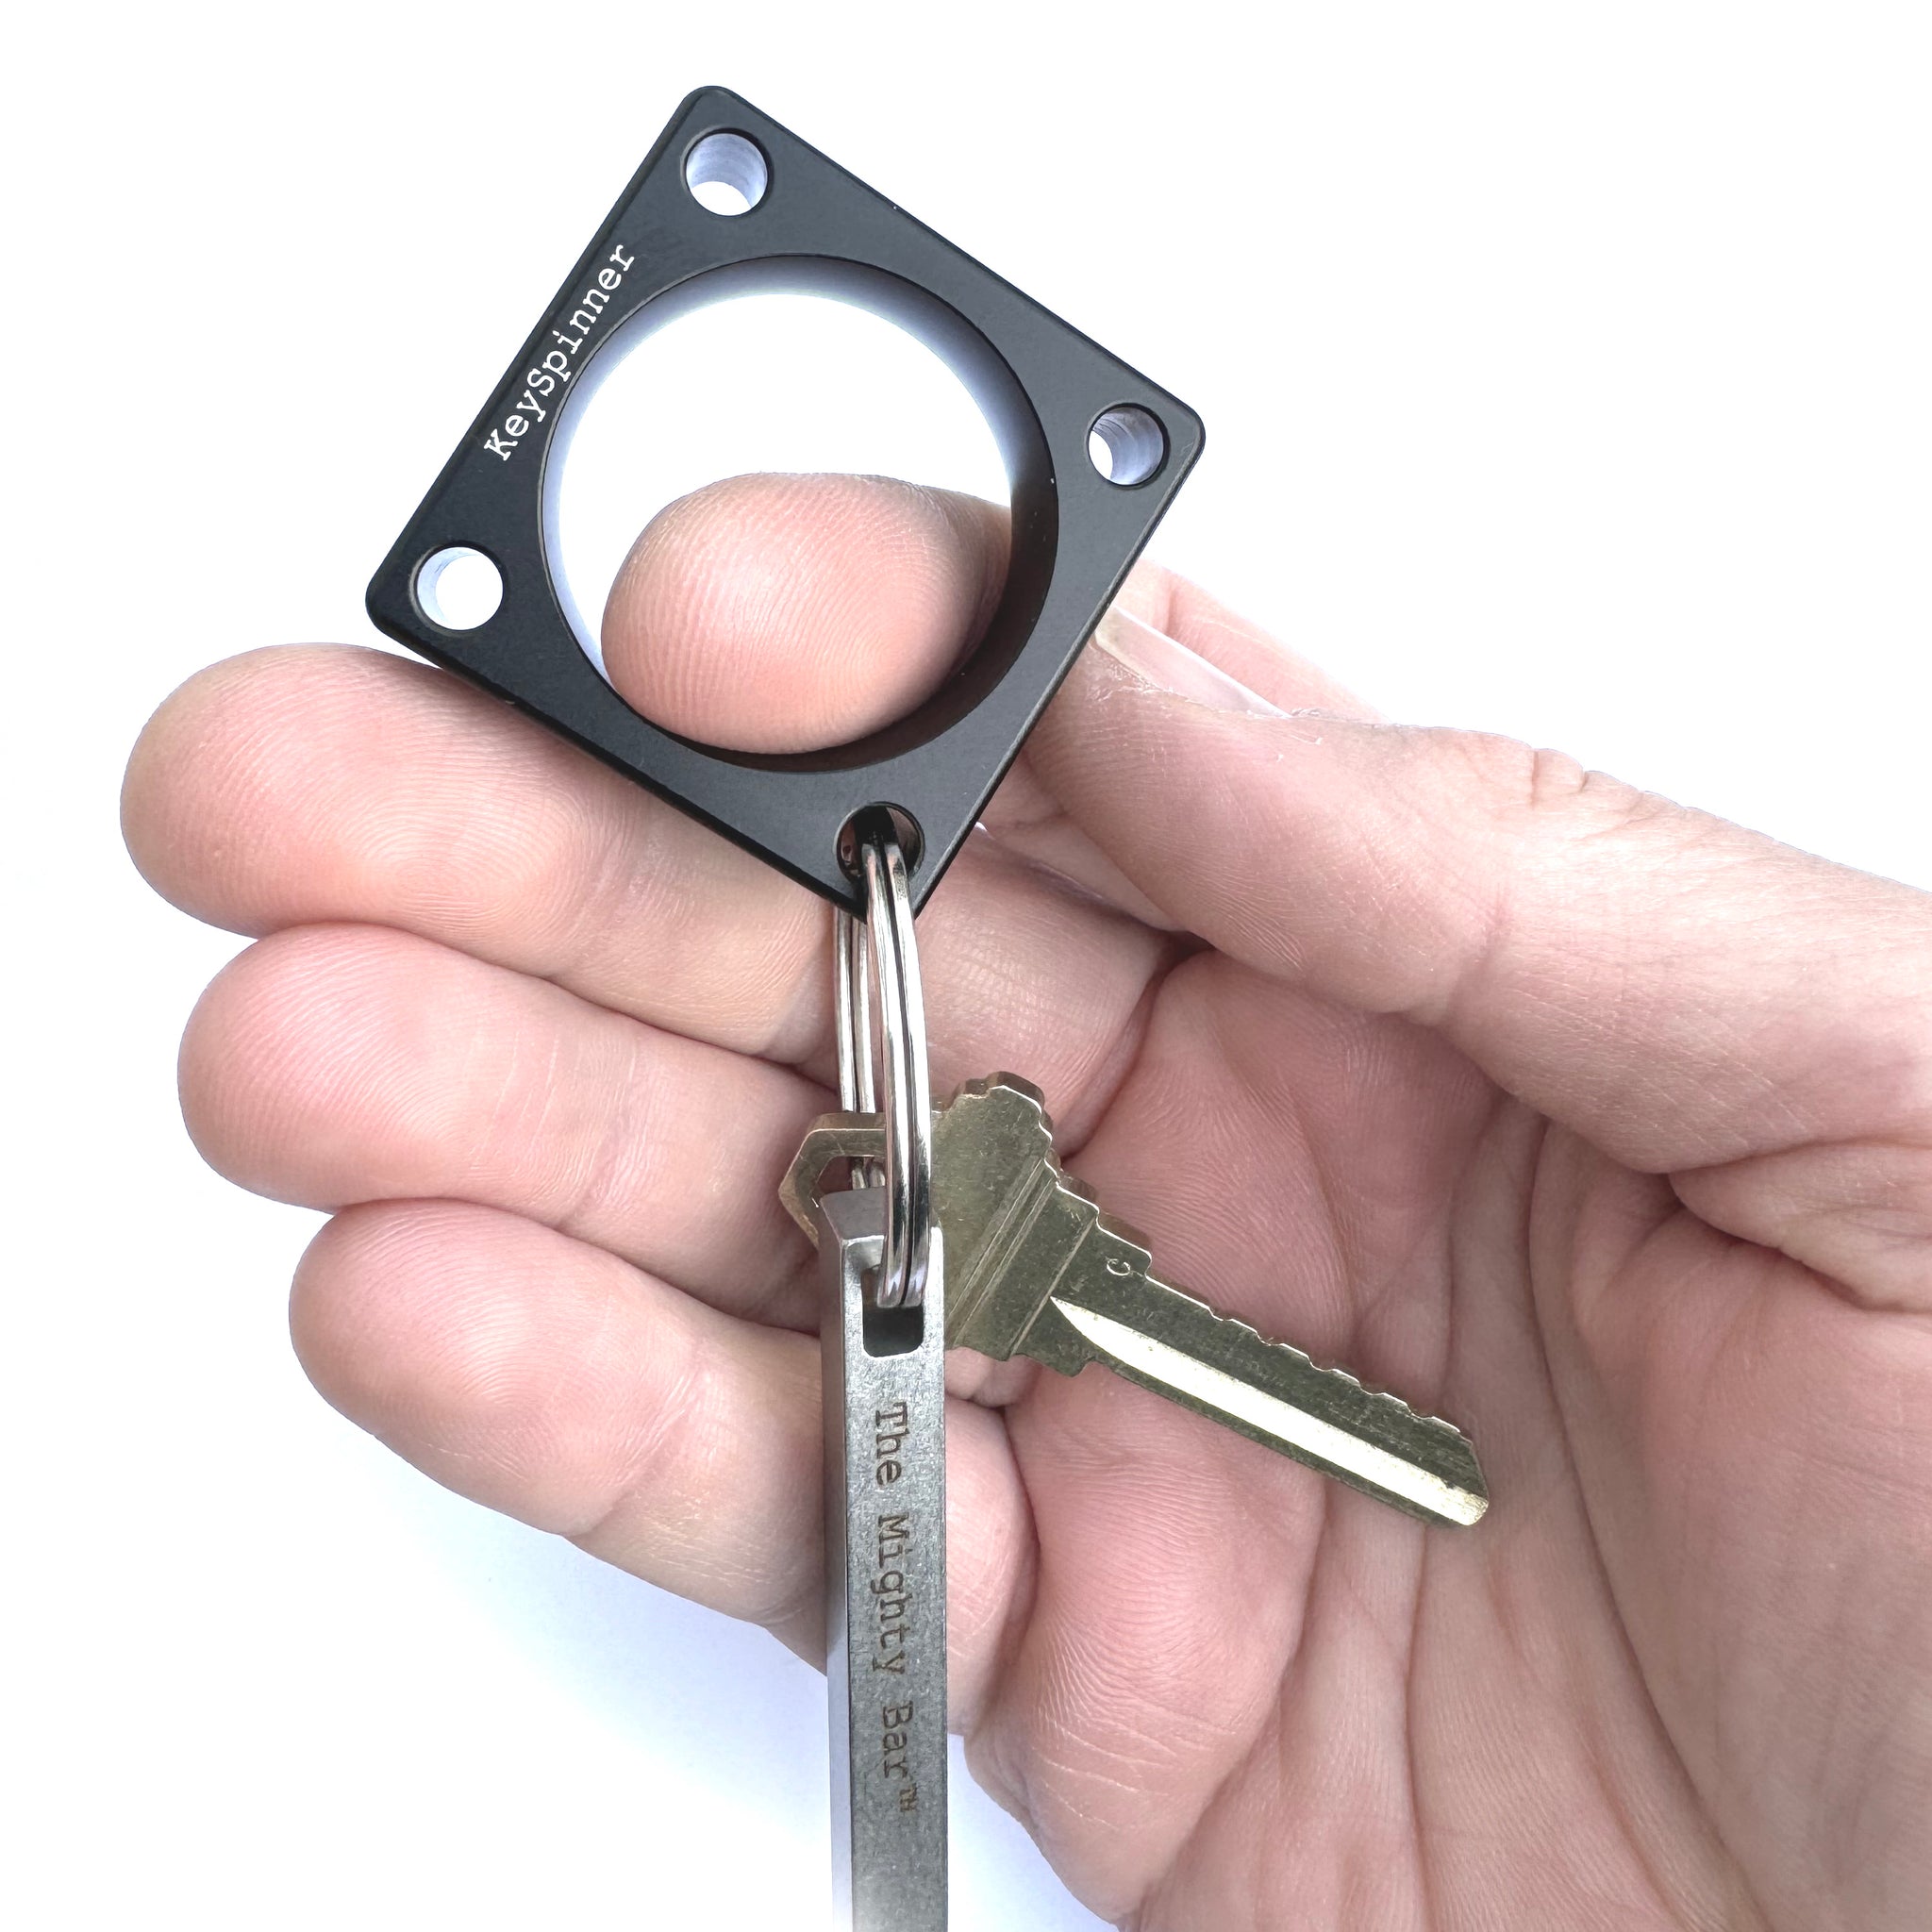 The KeySpinner – Gear Spool